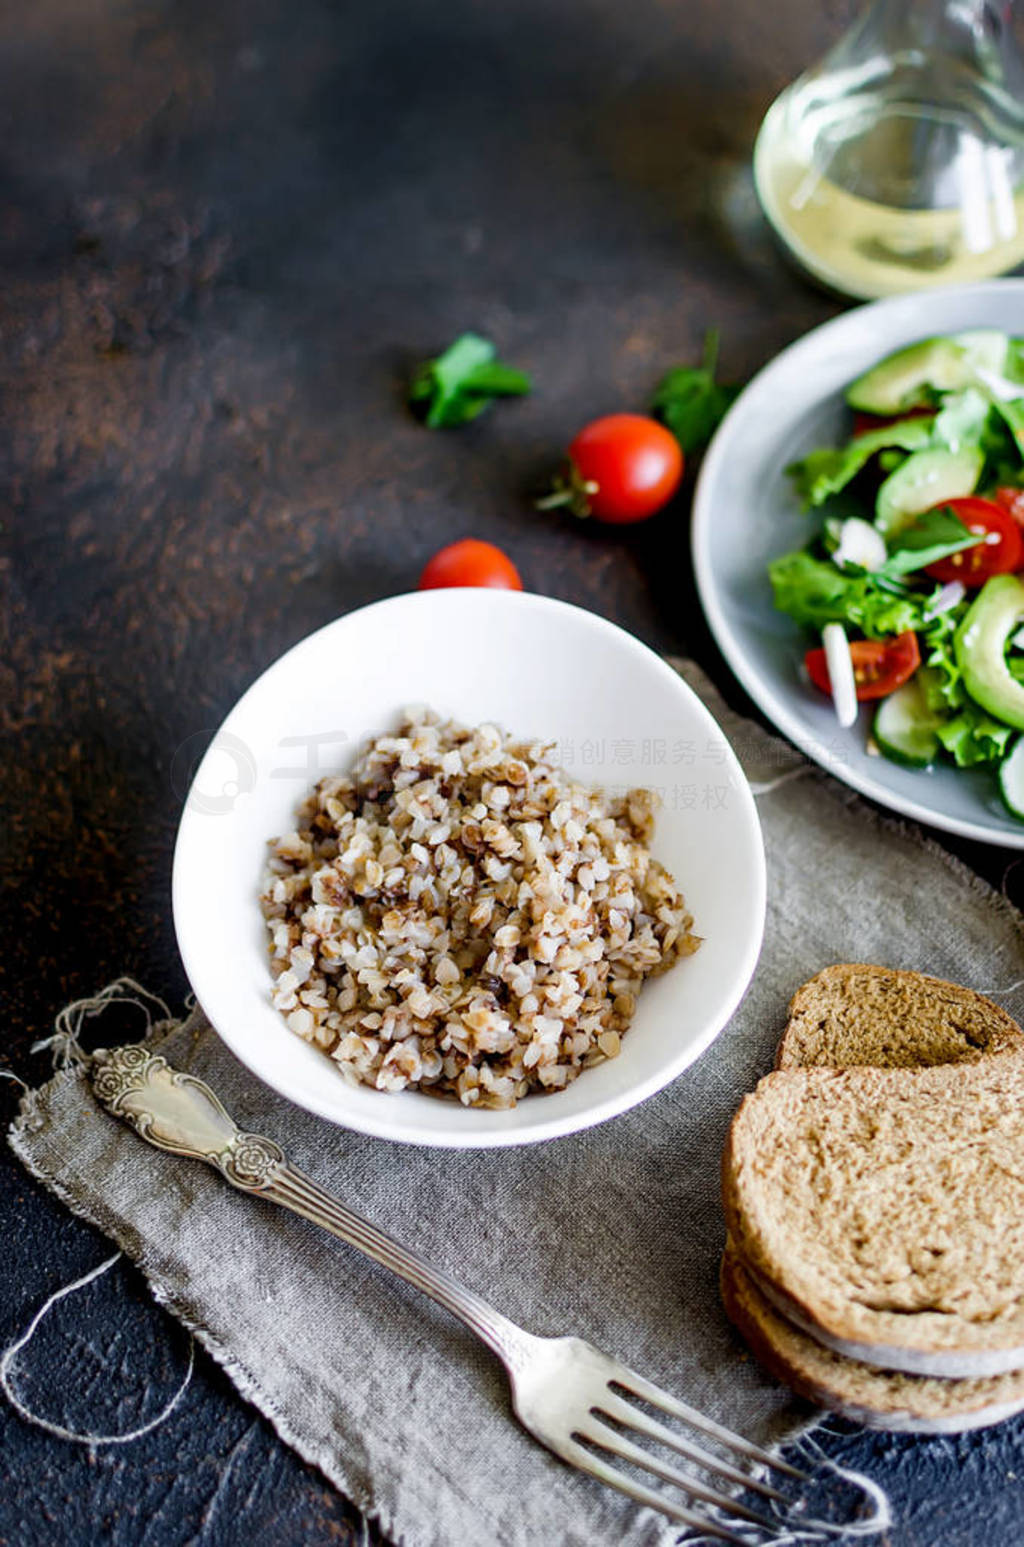 Buckwheat porridge and vegetable salad for for lanch, Diet Menu